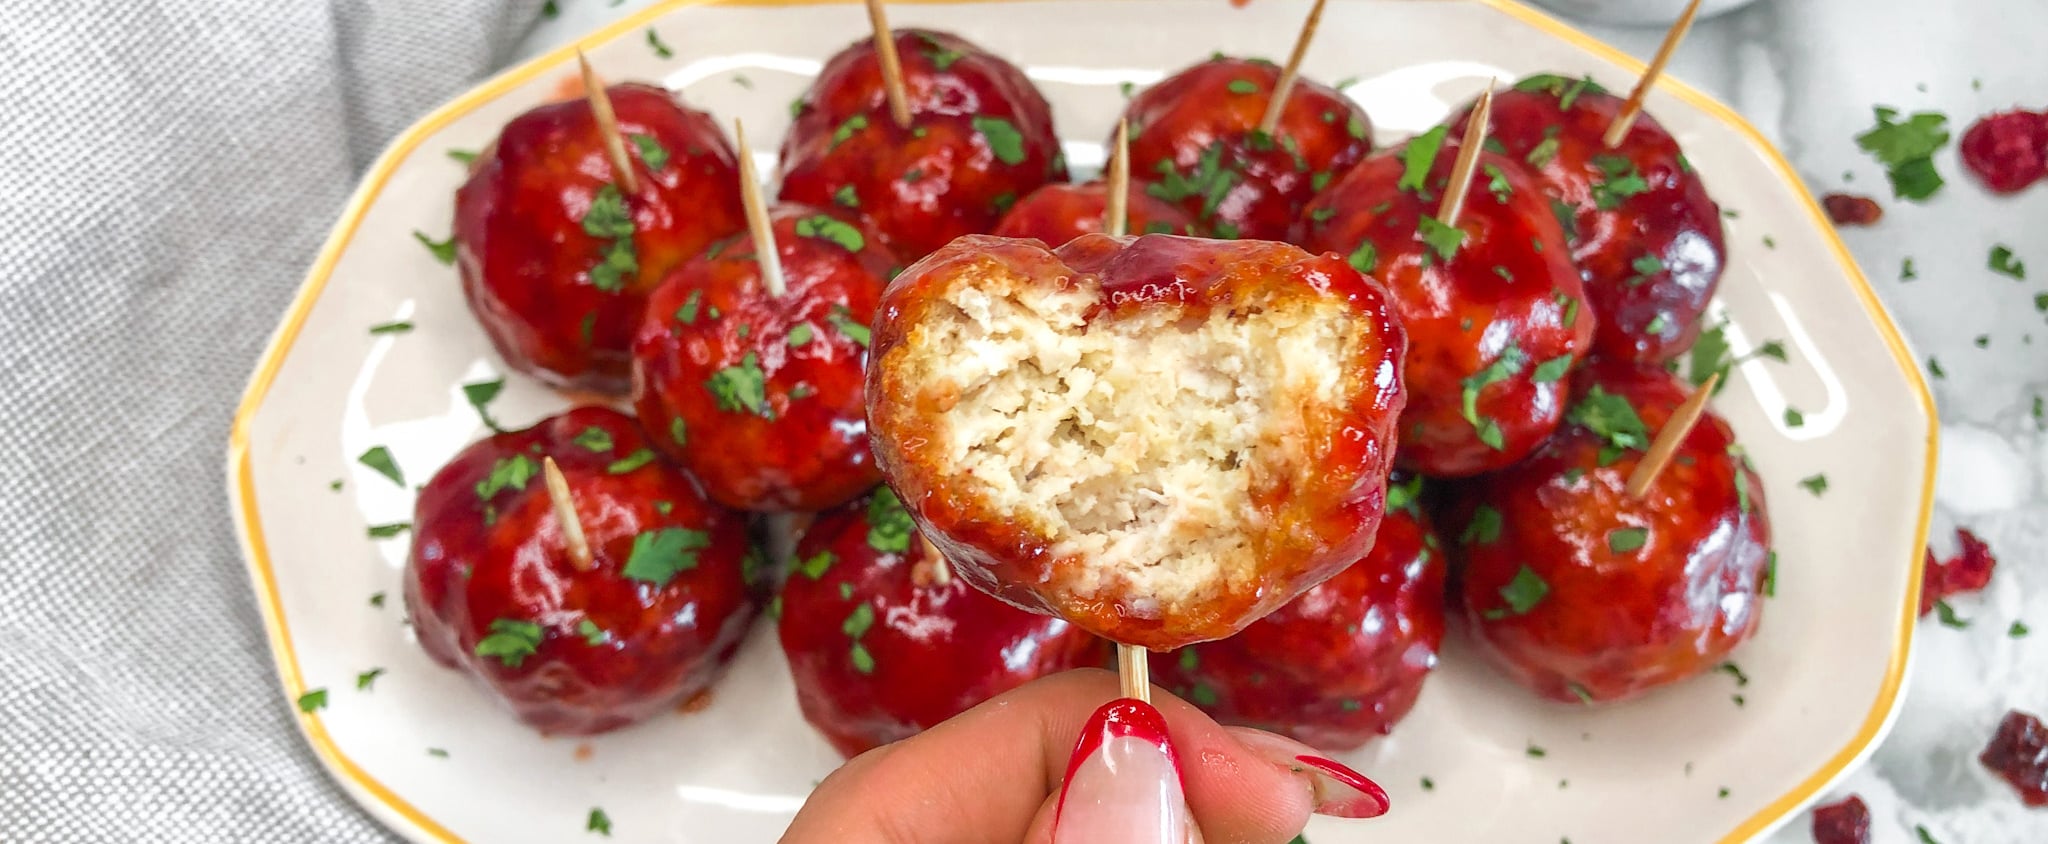 JoJo Siwa's Turkey and Cranberry Meatballs Recipe | POPSUGAR Food UK